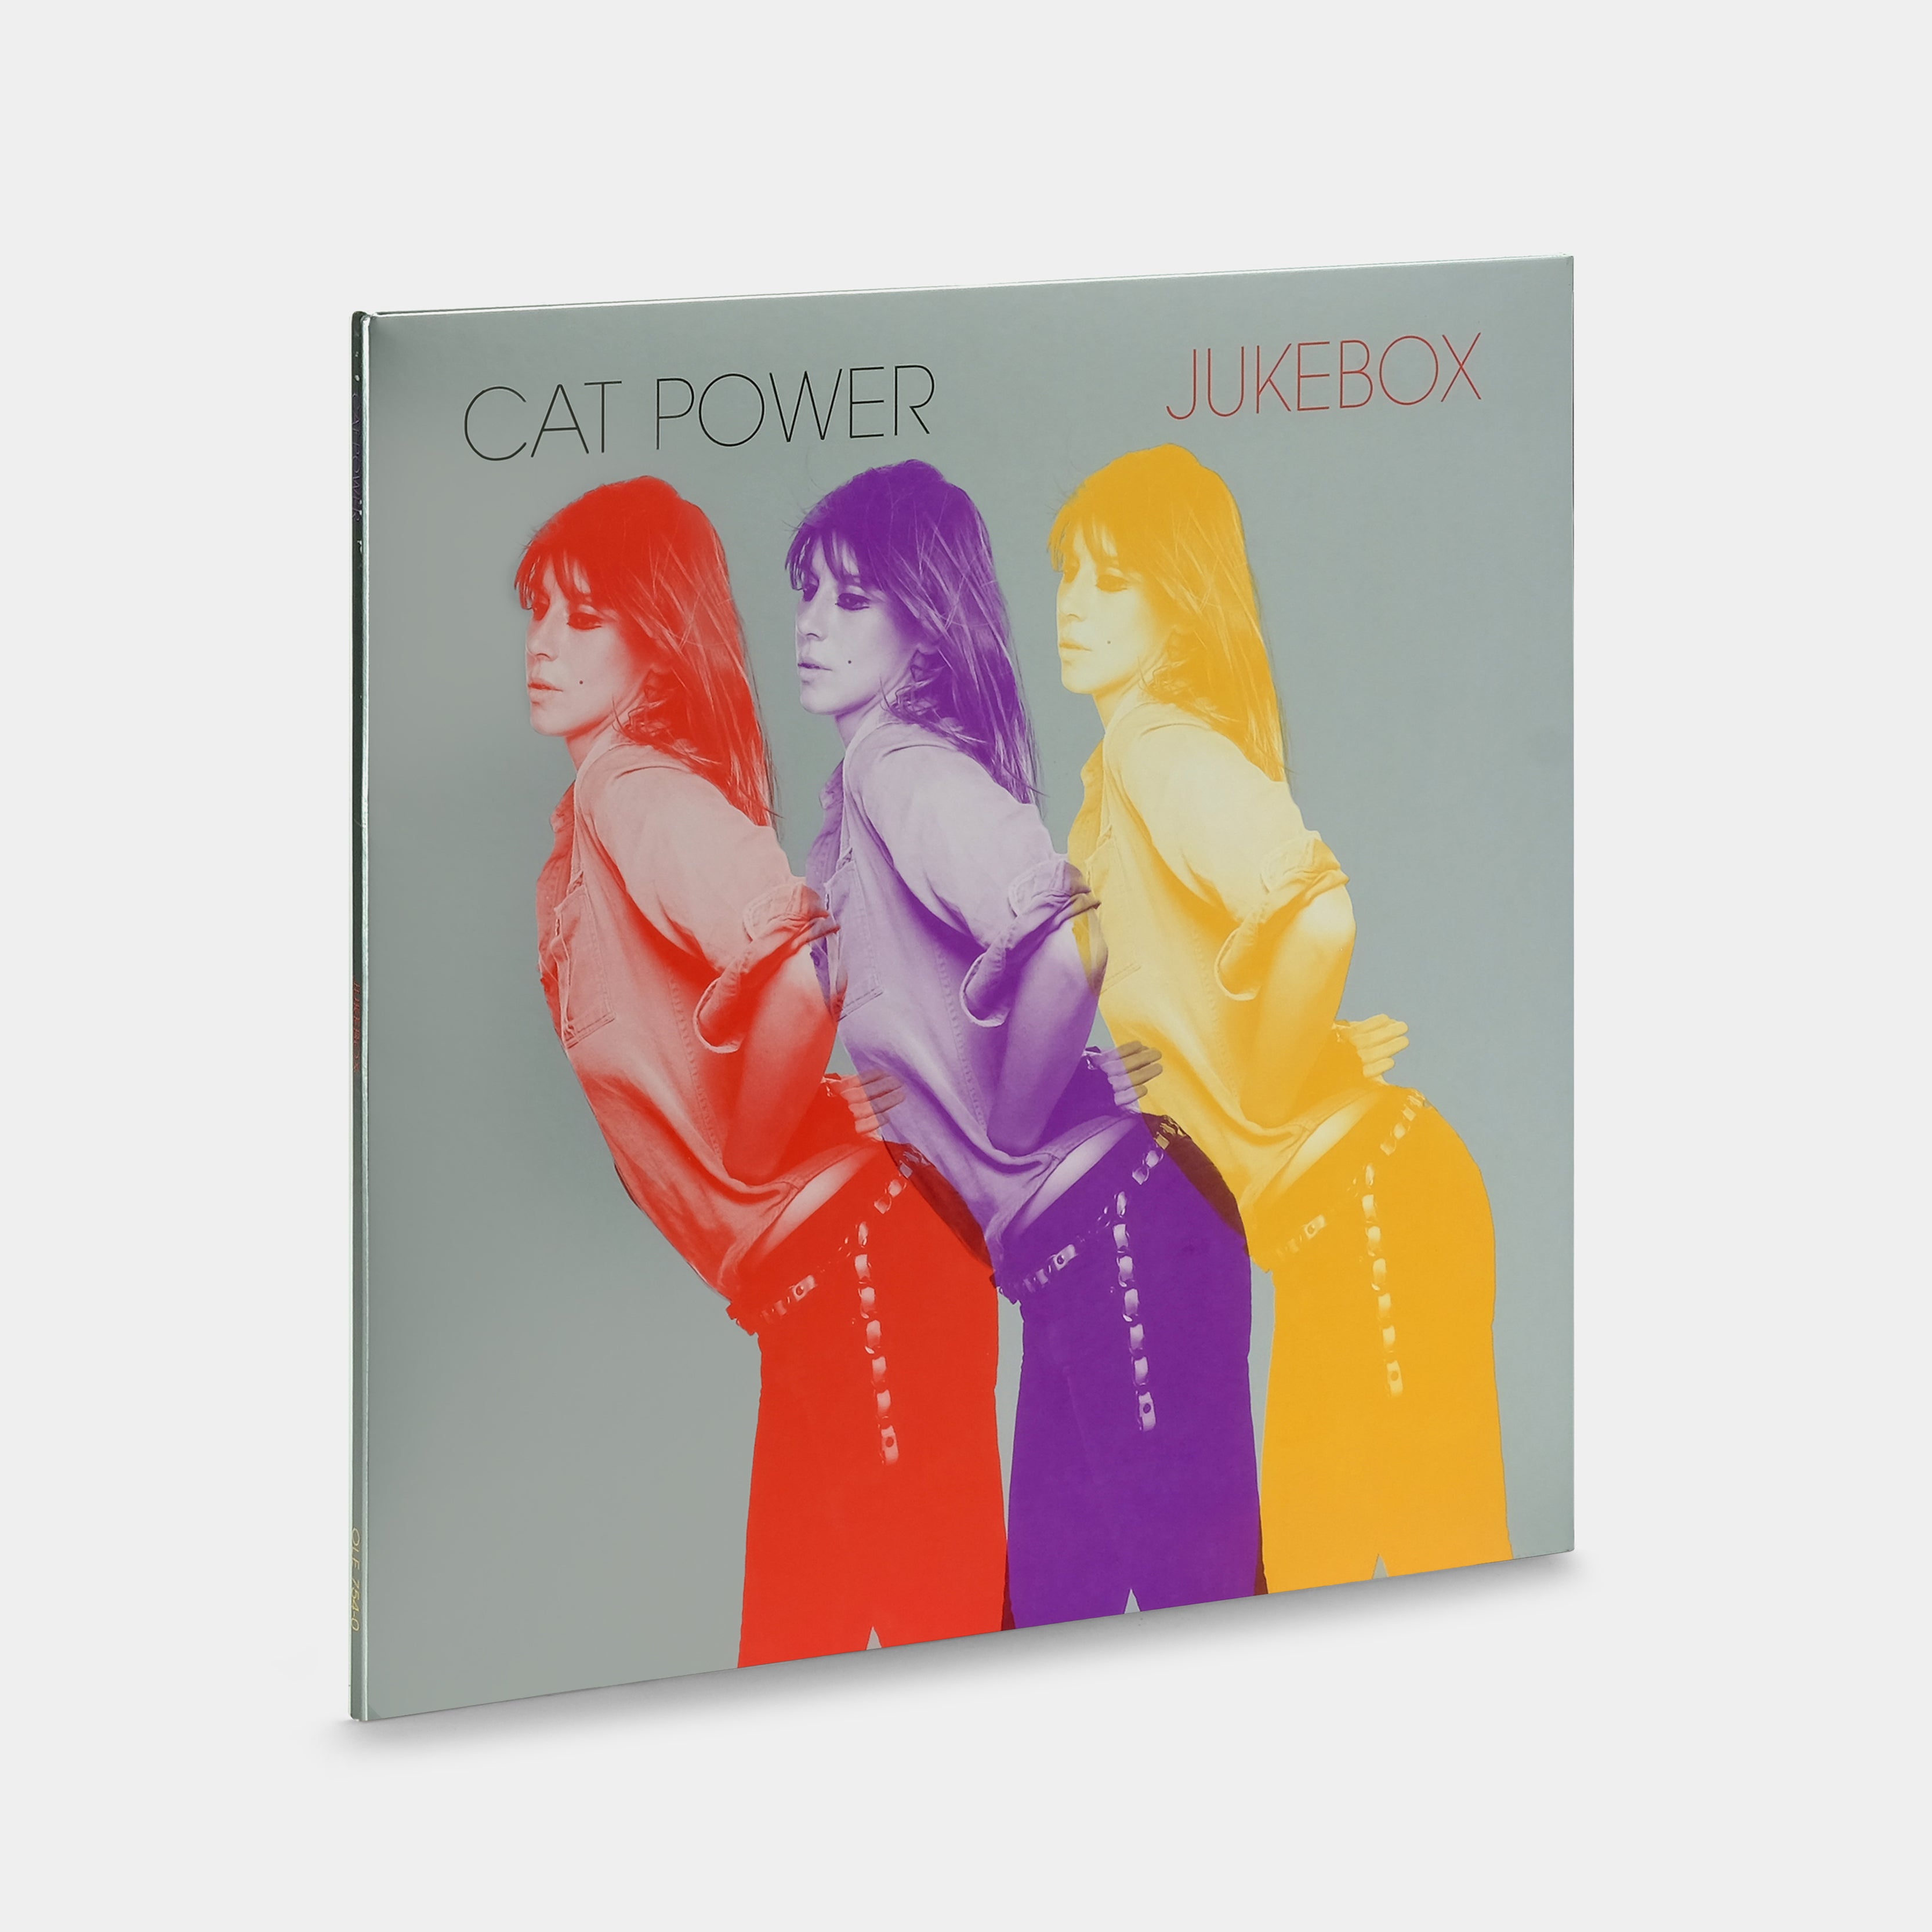 Cat Power - Jukebox LP Vinyl Record